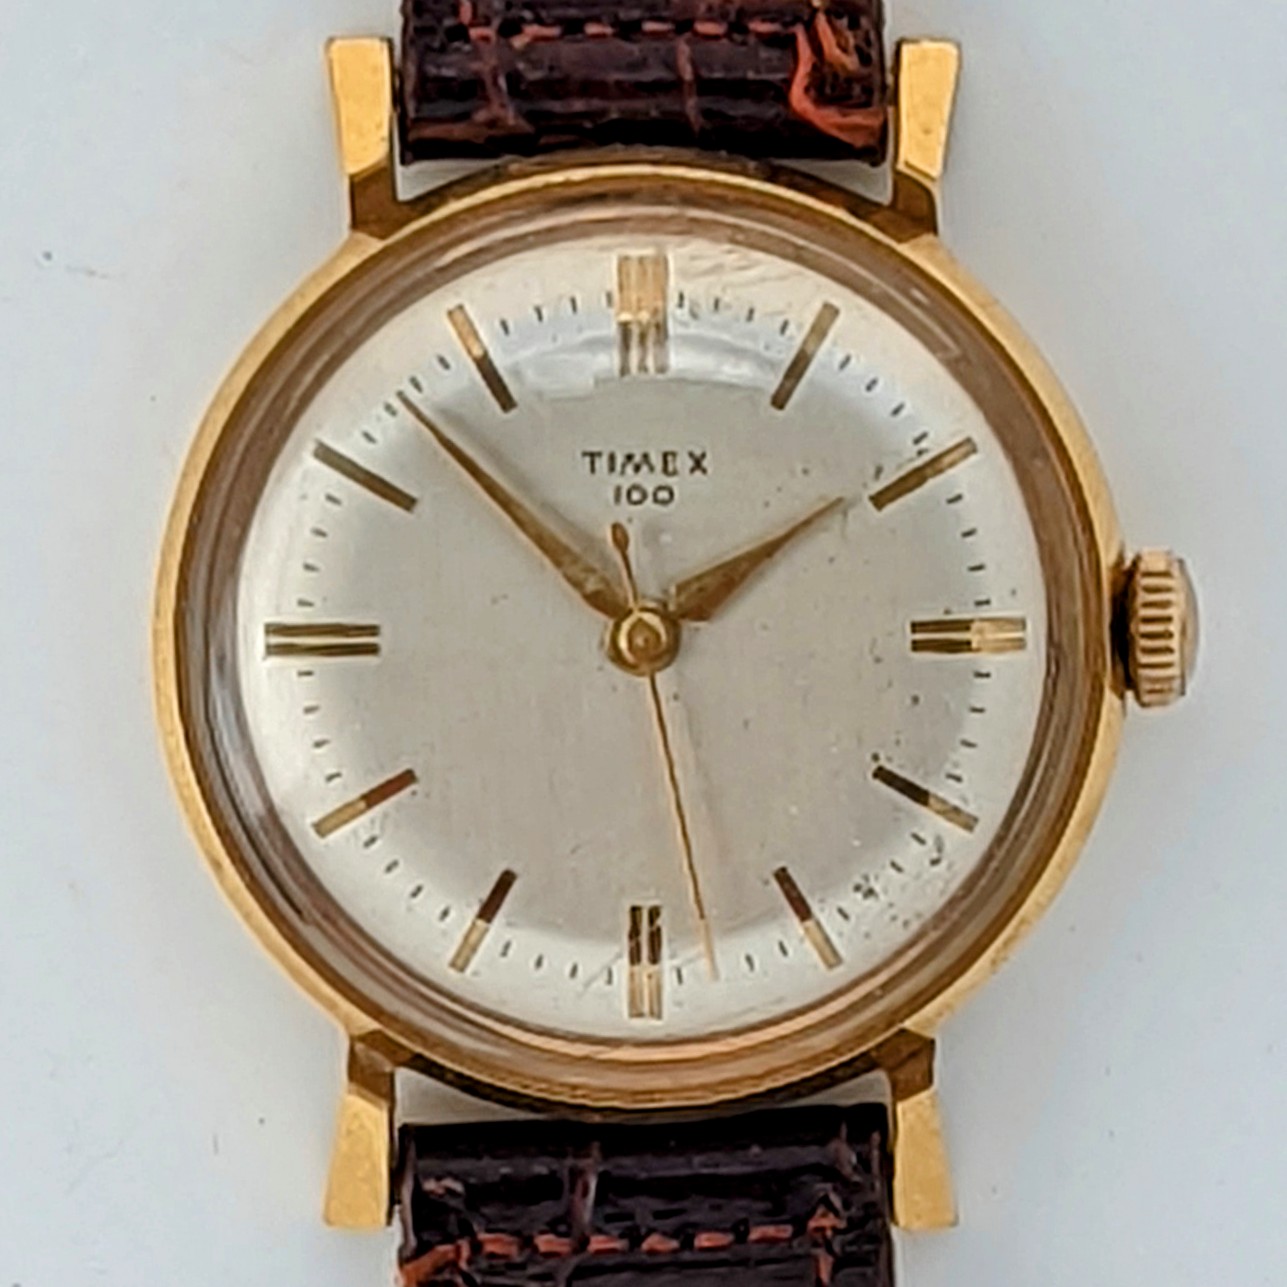 Timex 100 Extra Thin 1960 Ref. 5160 2360